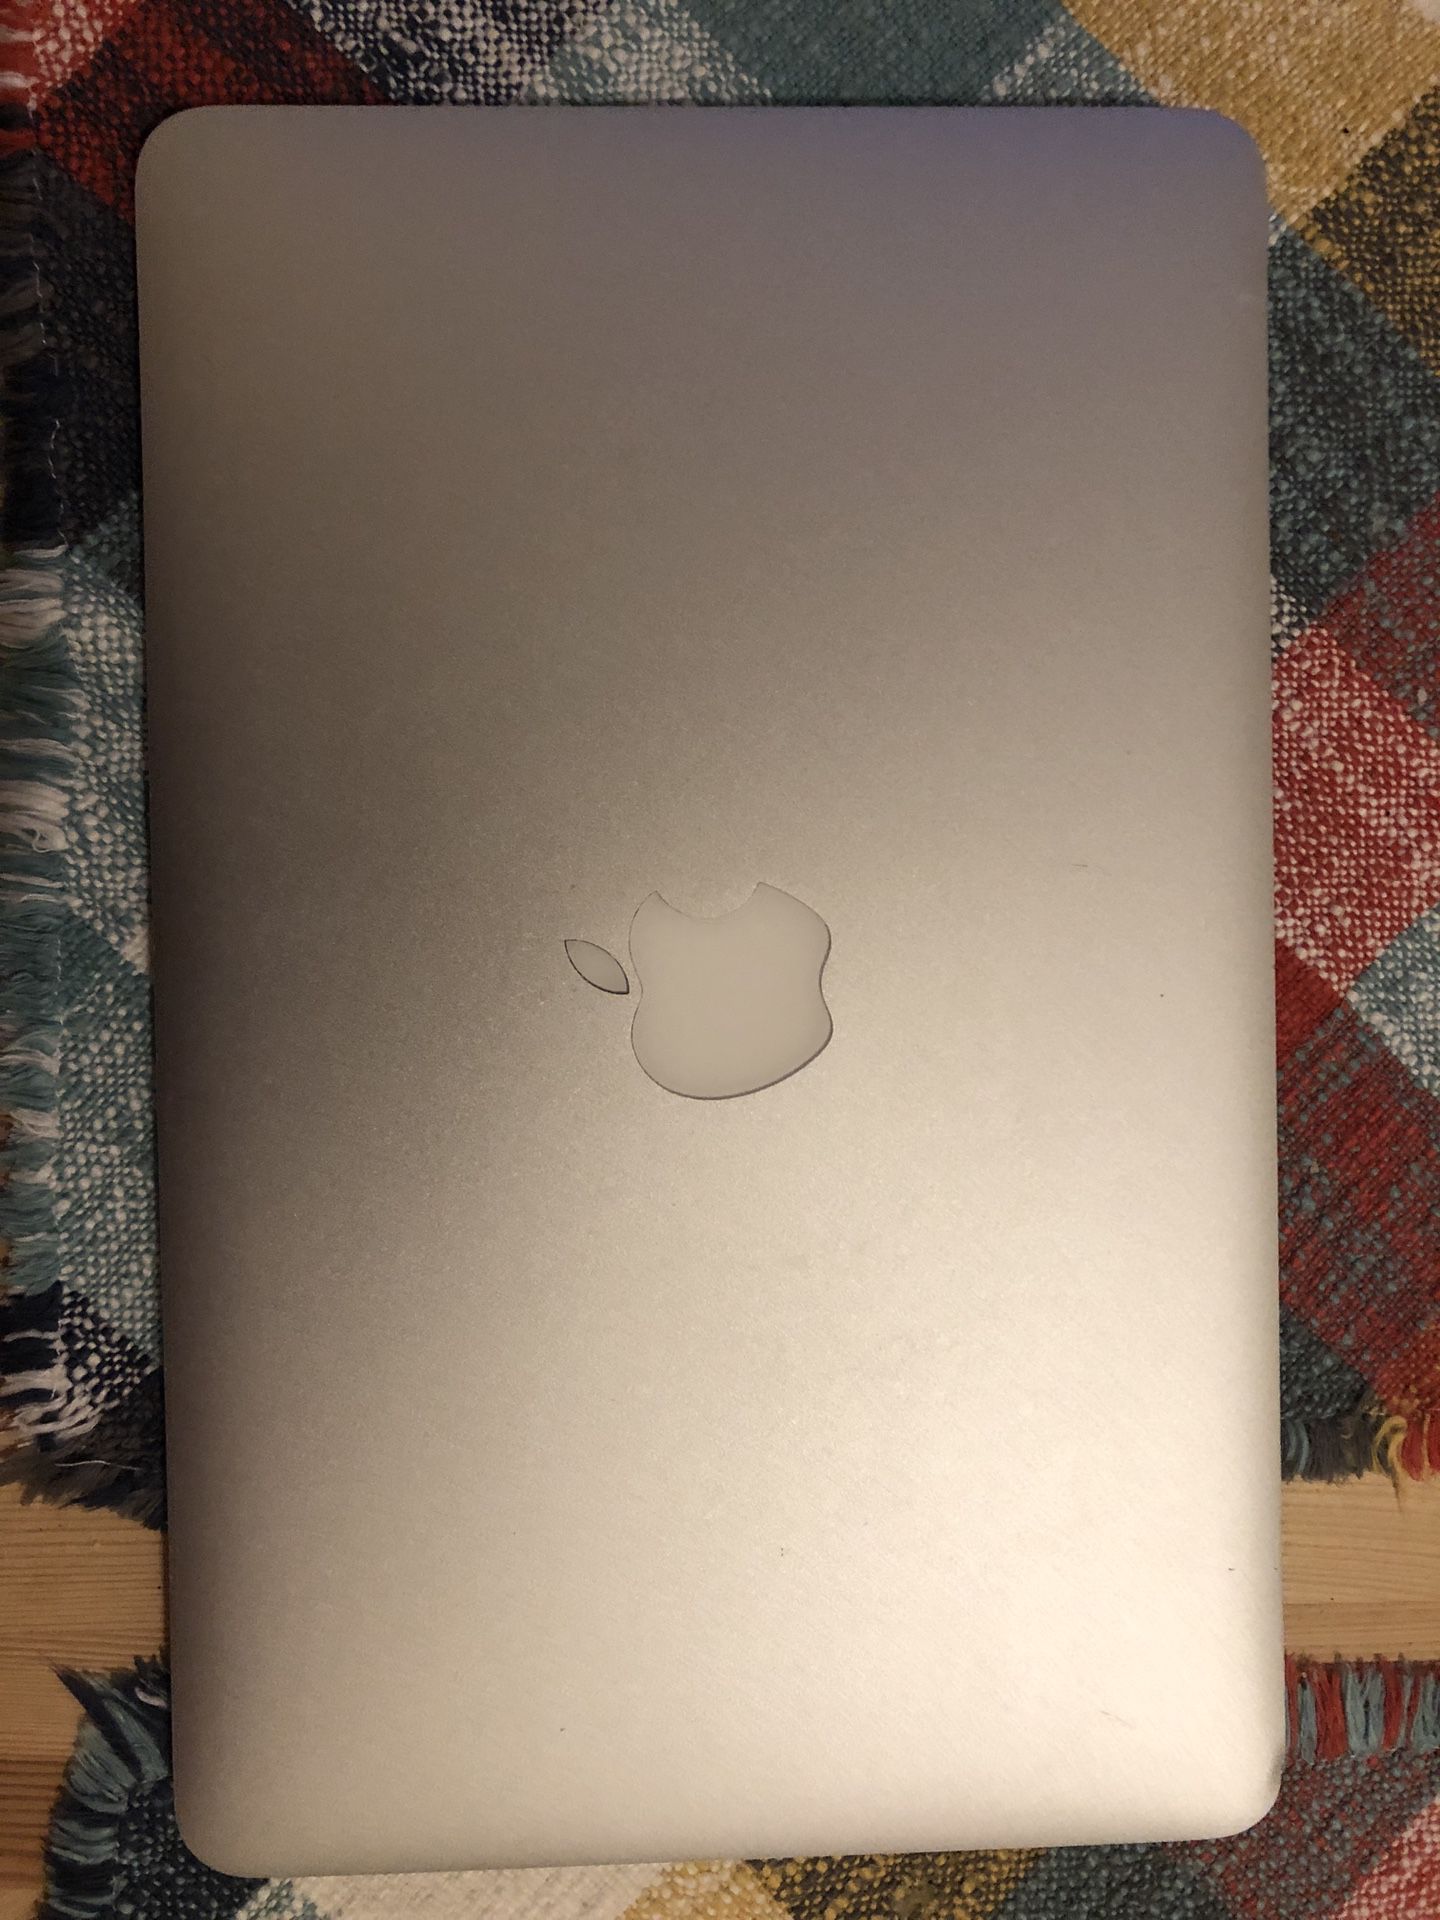 MacBook Air 11 in 2012